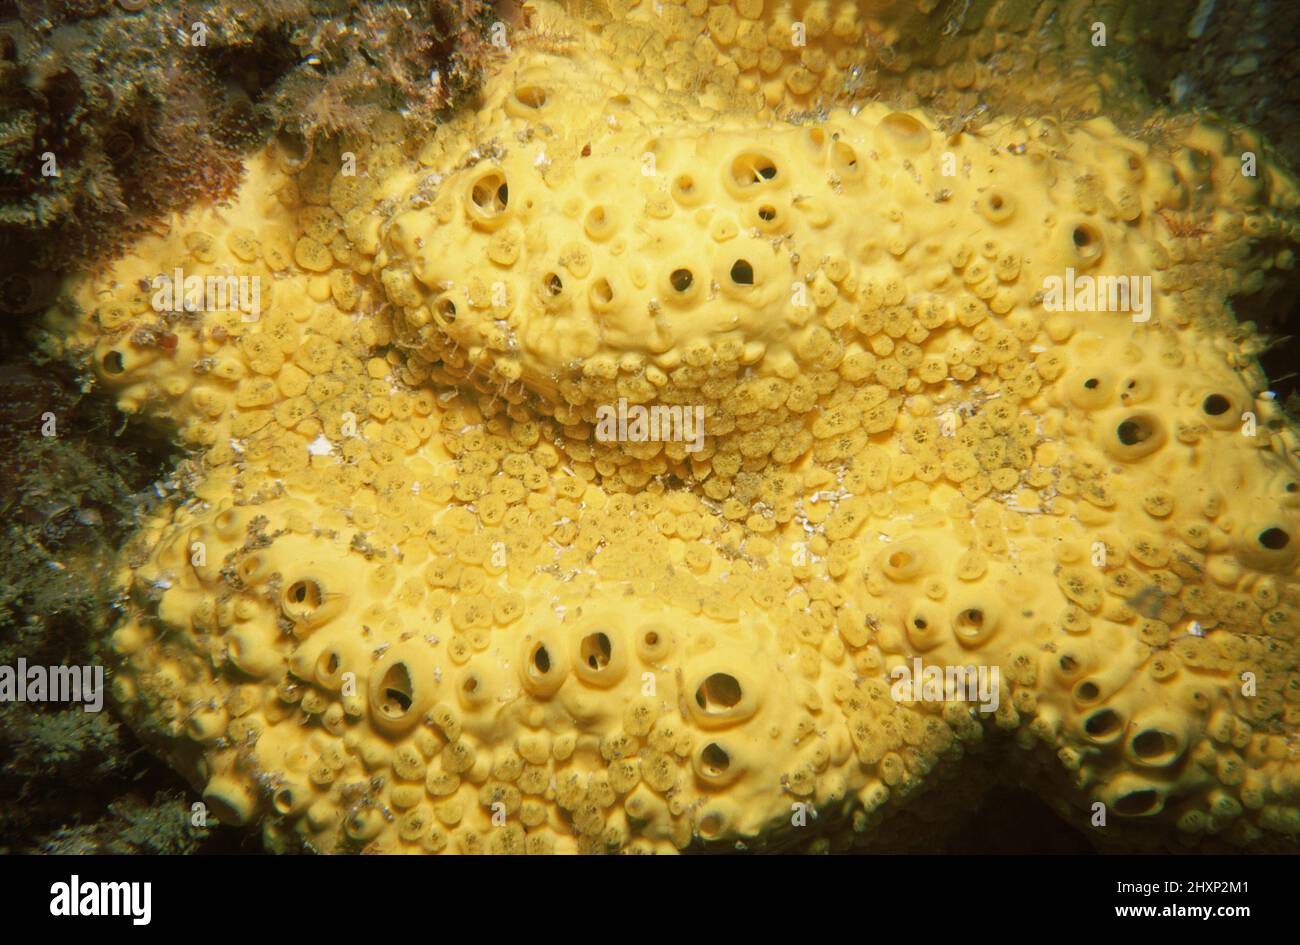 Boring sponge (Cliona celata) Channel Islands, English Channel. Stock Photo